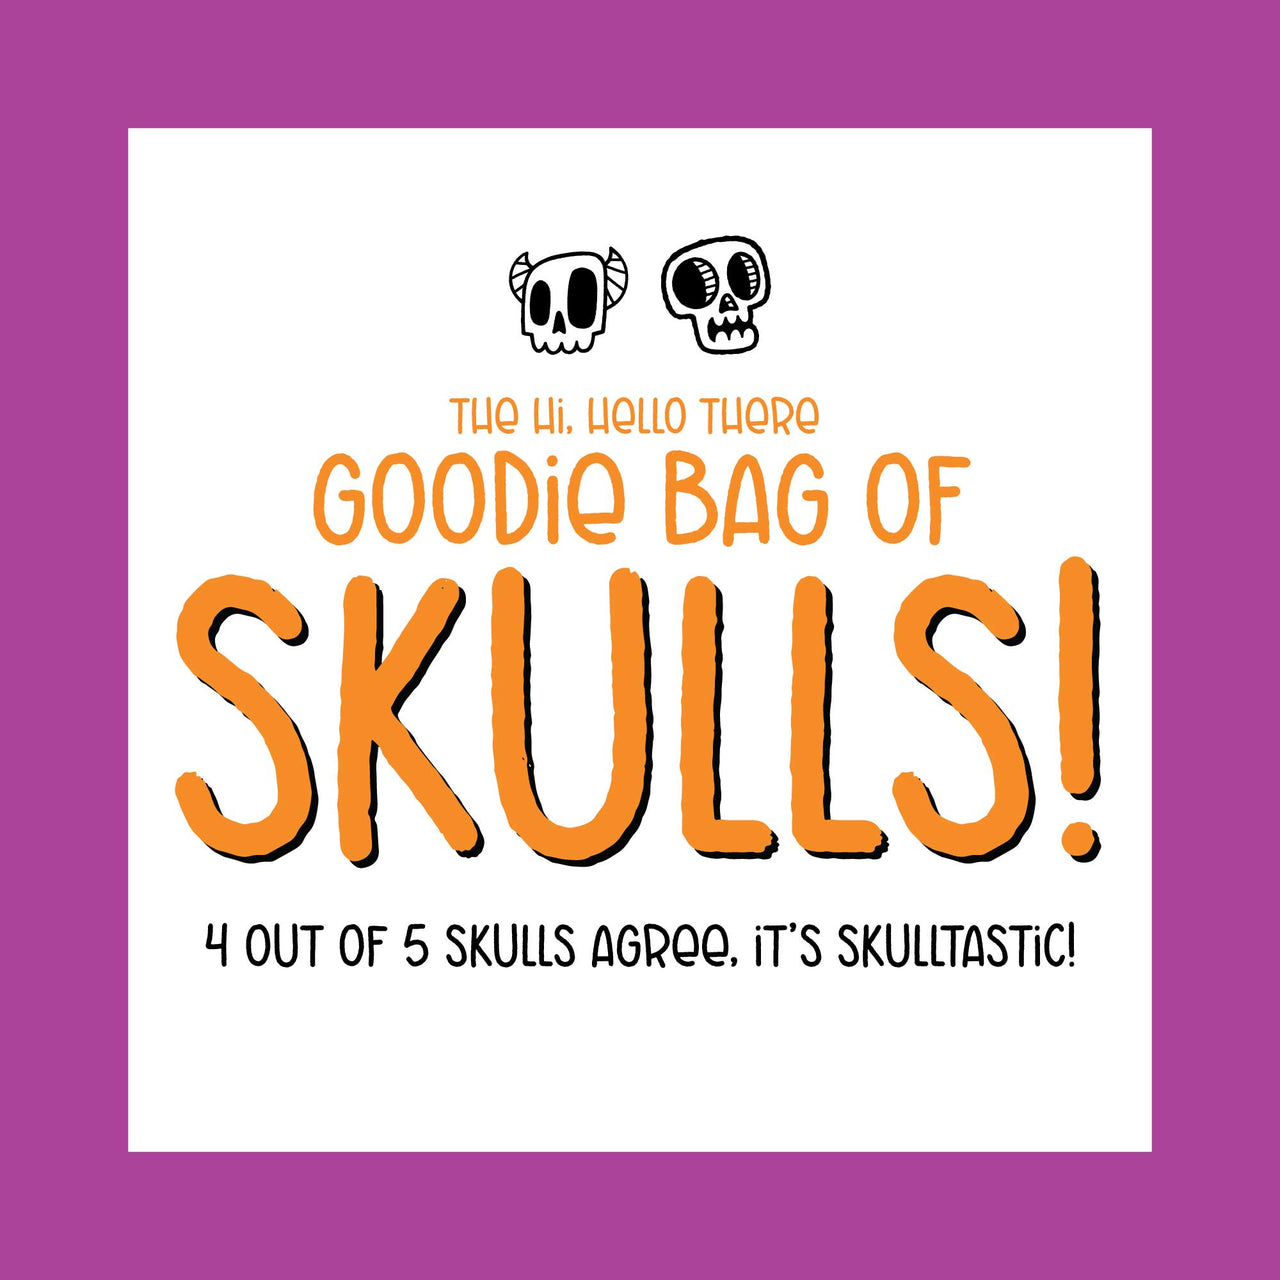 Goodie Bag of Skulls